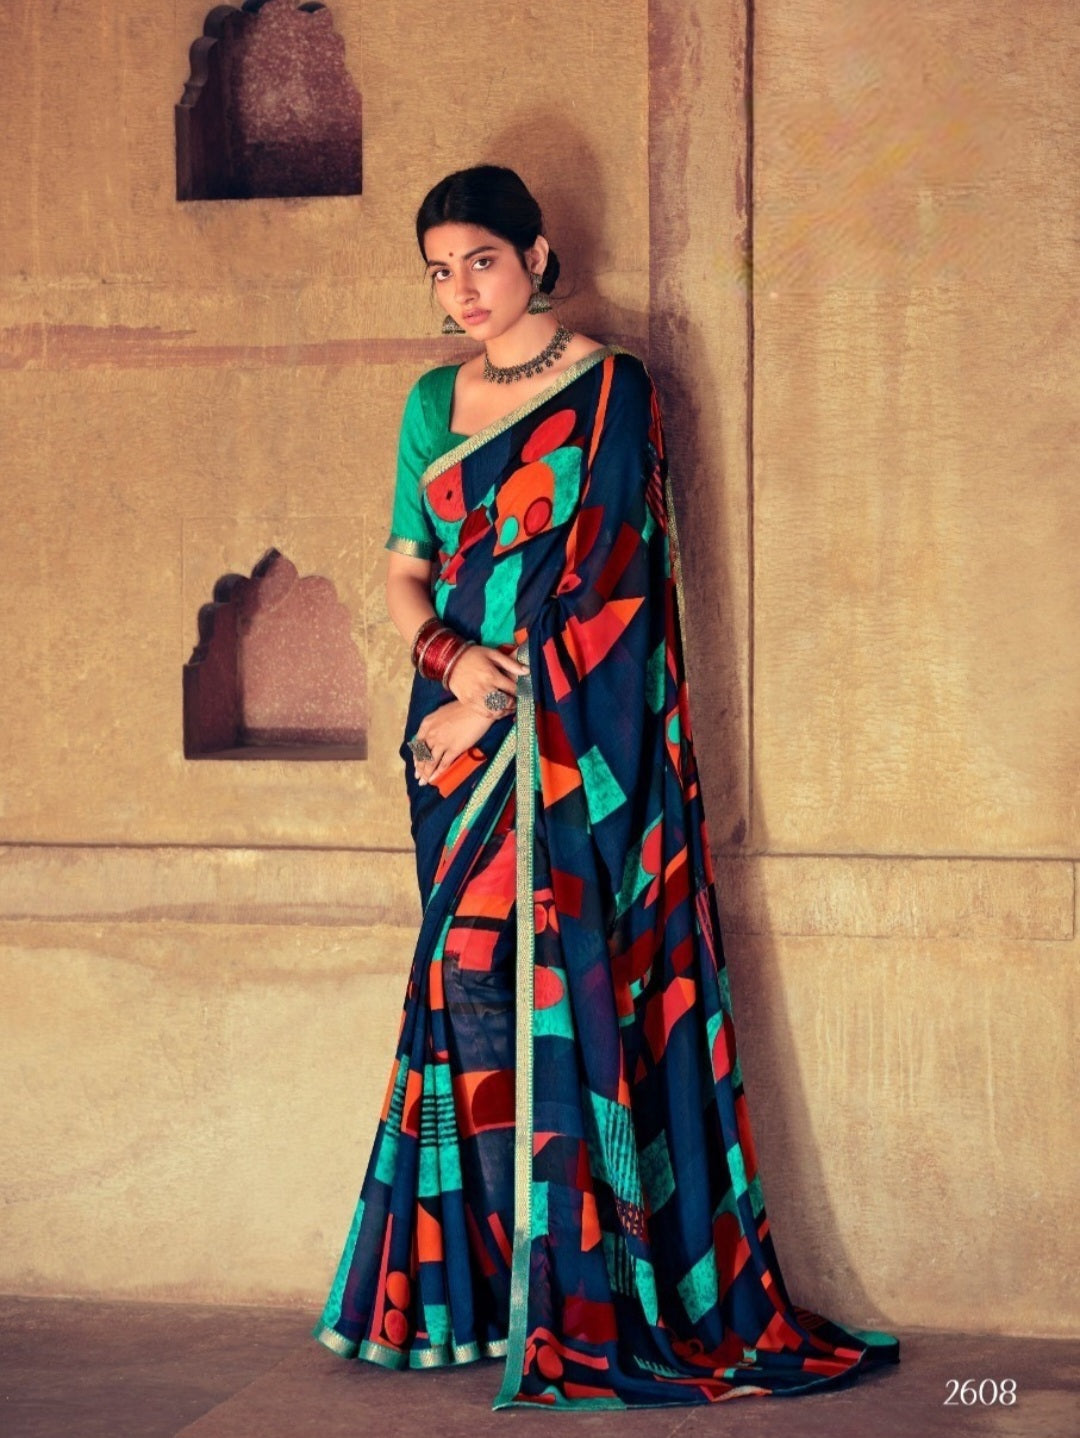 Soft Chiffon geometric shapes sarees - Multi color